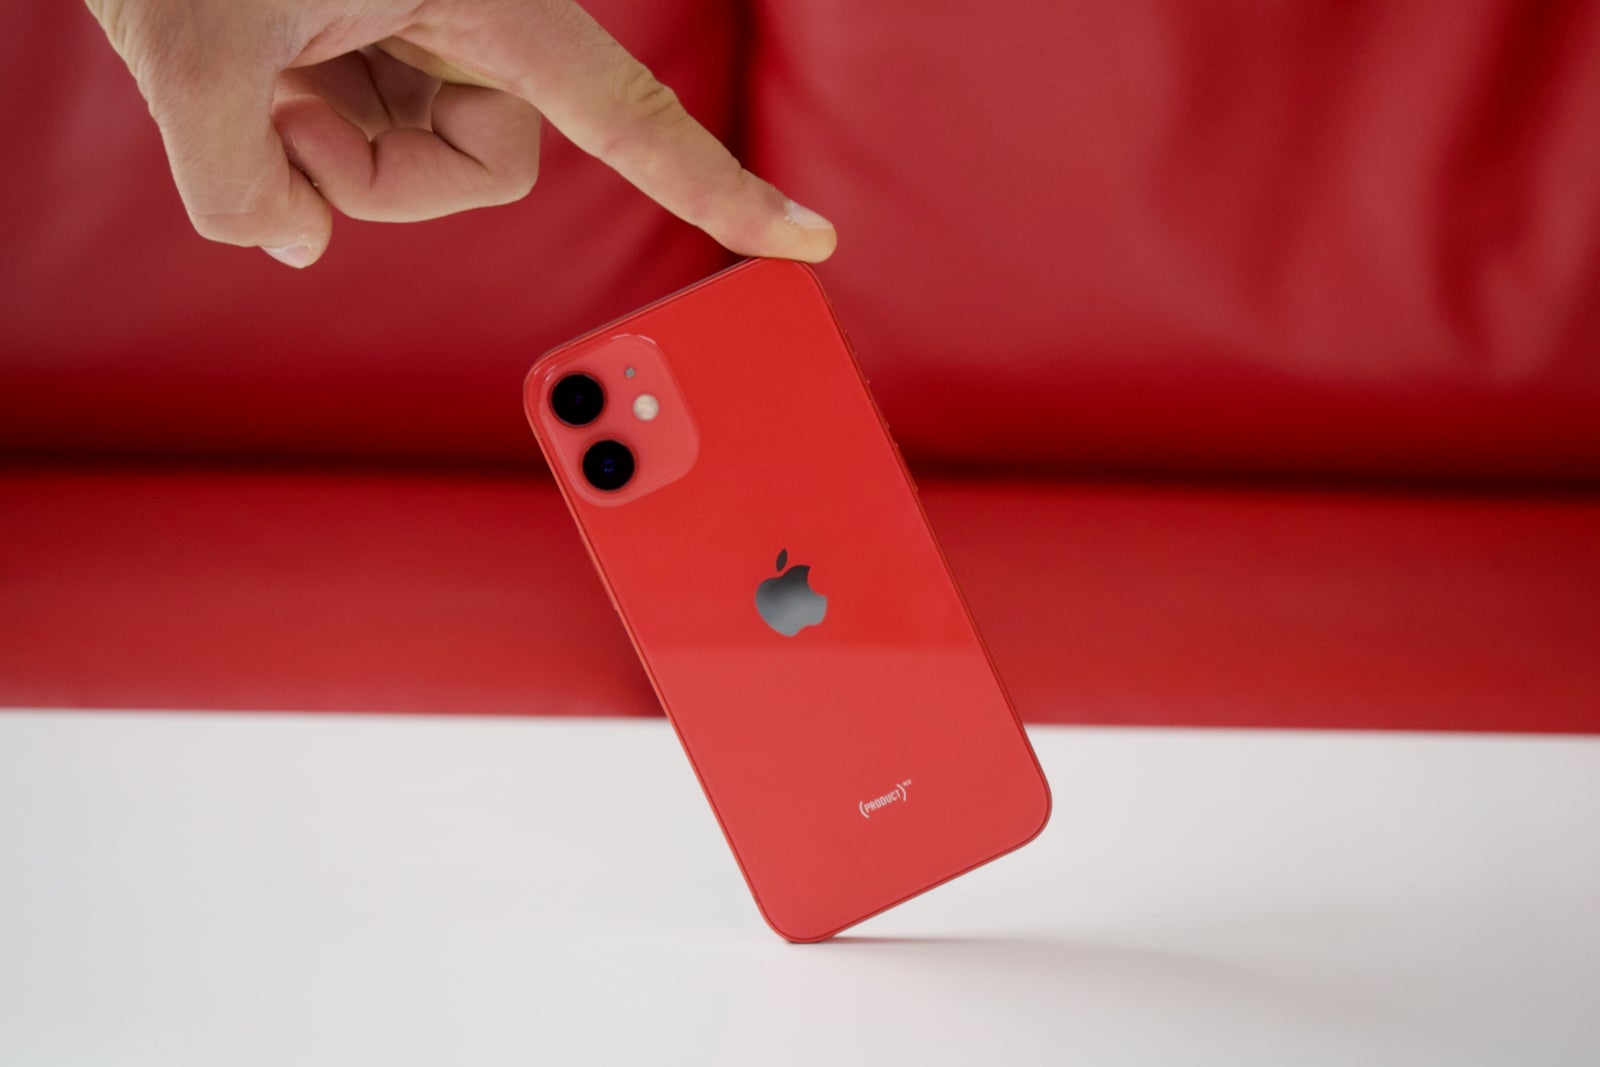 Should Apple just kill the iPhone 12 Mini?